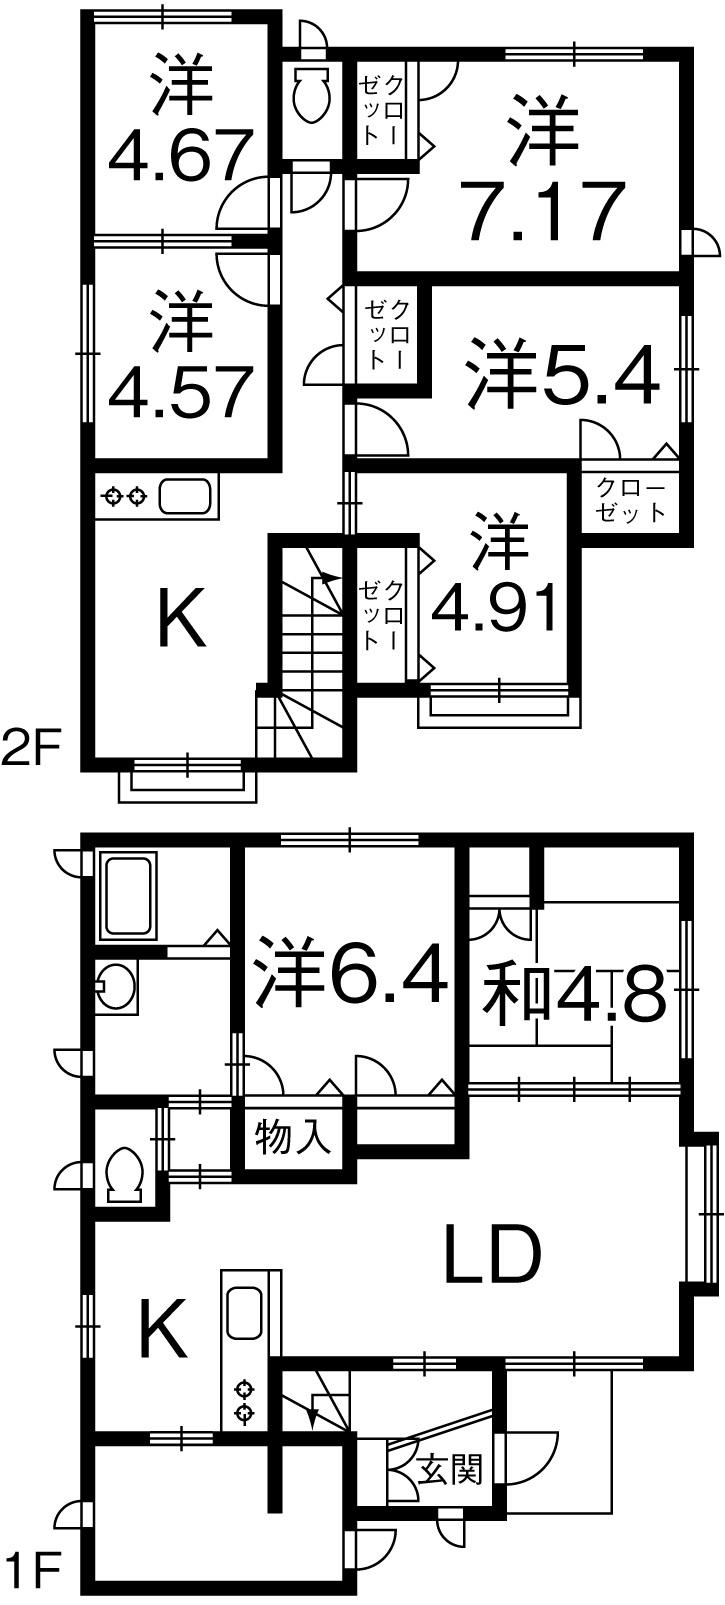 Floor plan. 28.8 million yen, 7LDK + S (storeroom), Land area 156.94 sq m , Building area 142.41 sq m